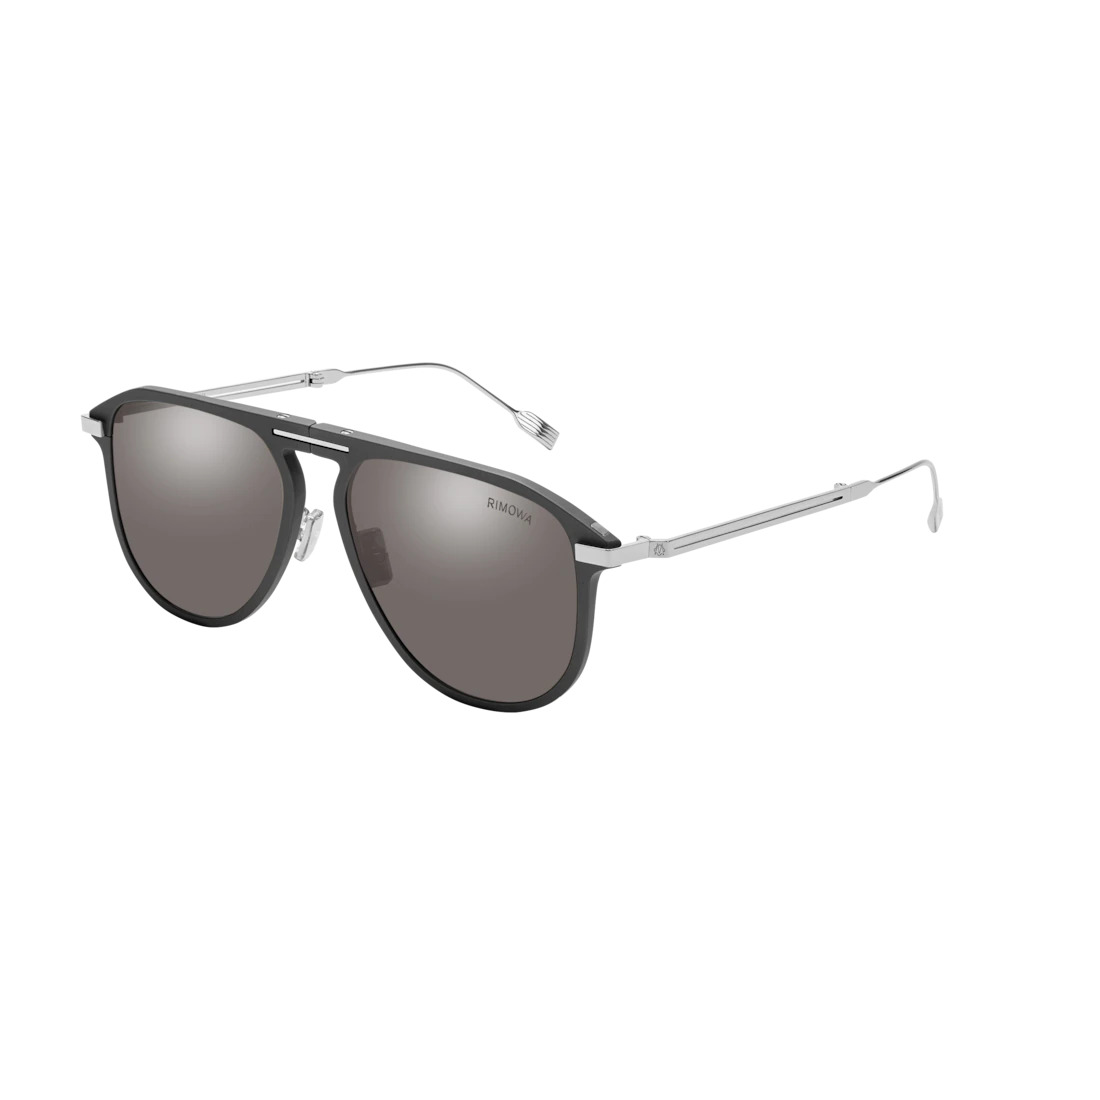 Eyewear Pilot Foldable Mercury Gray Sunglasses - 4